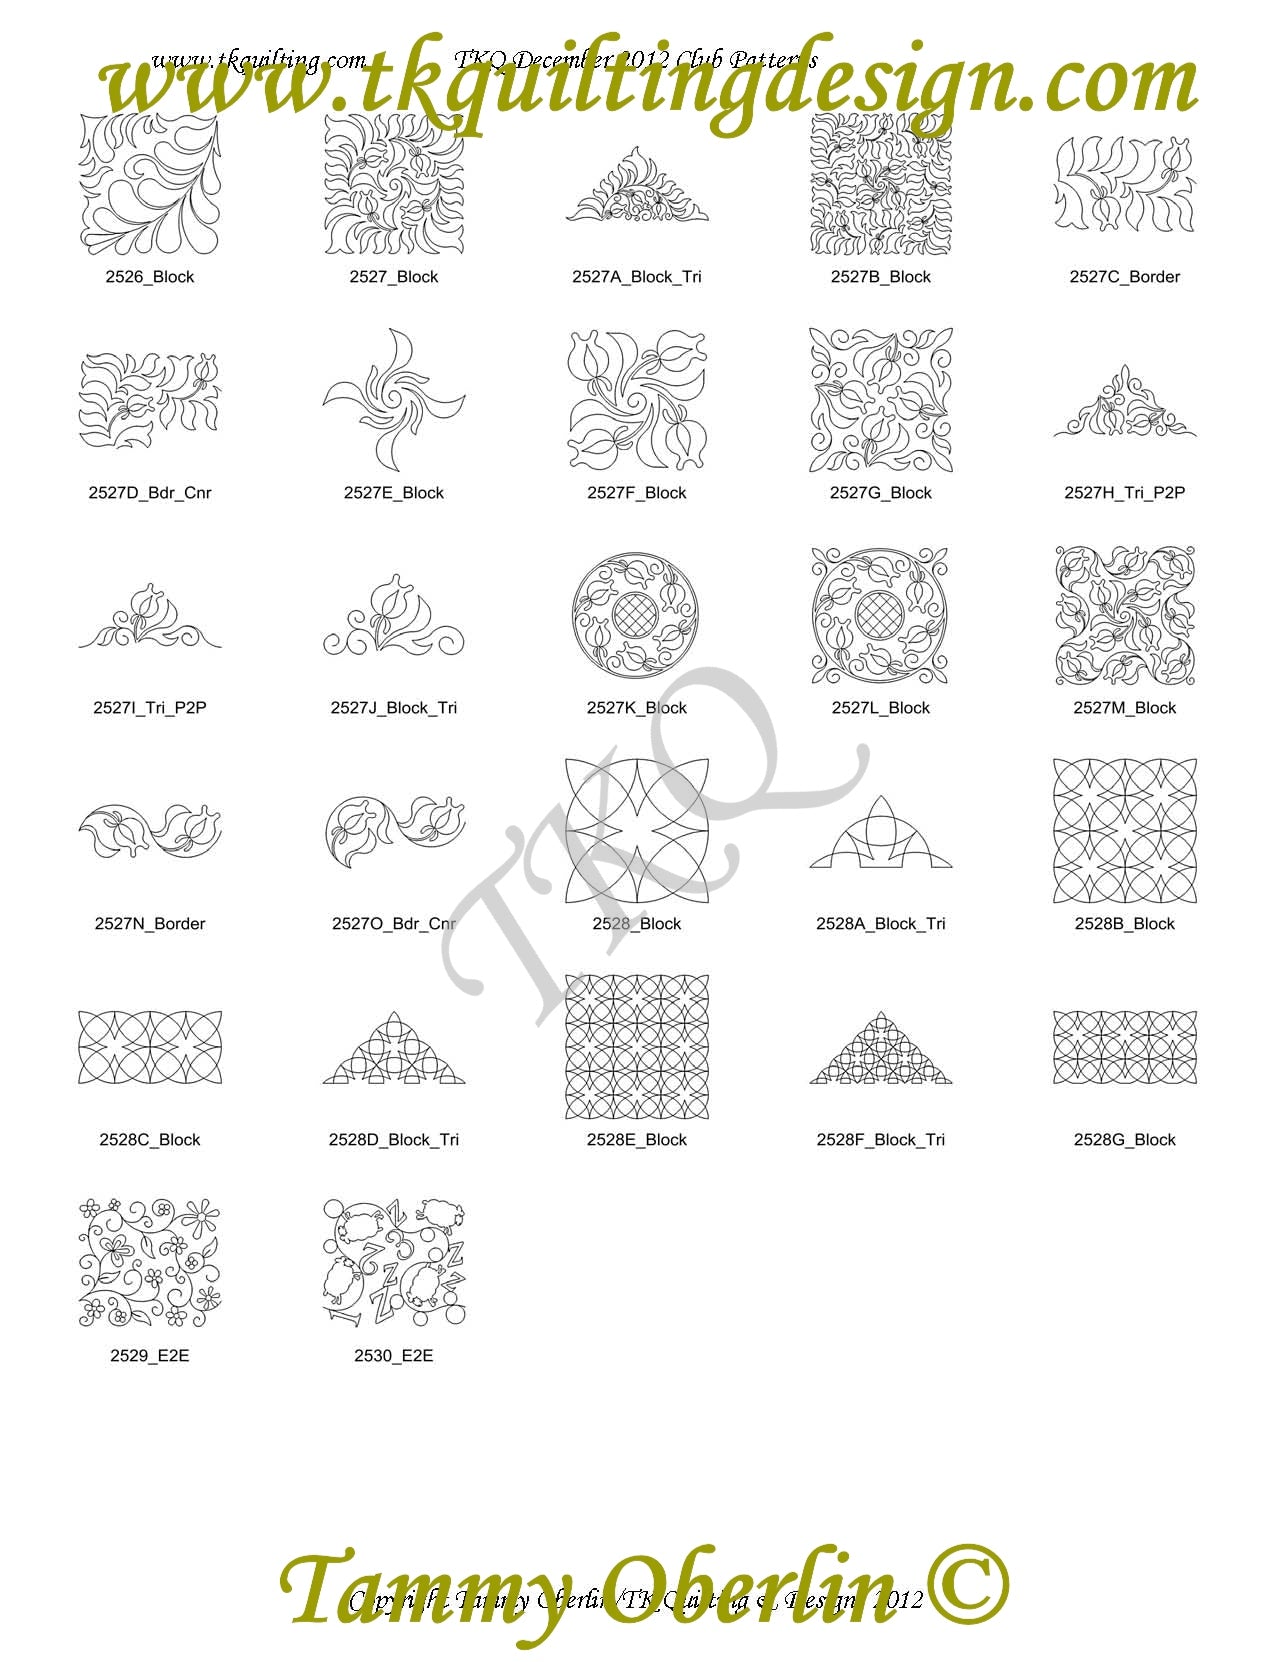 26 TKQ December 2012 Pattern Bundle